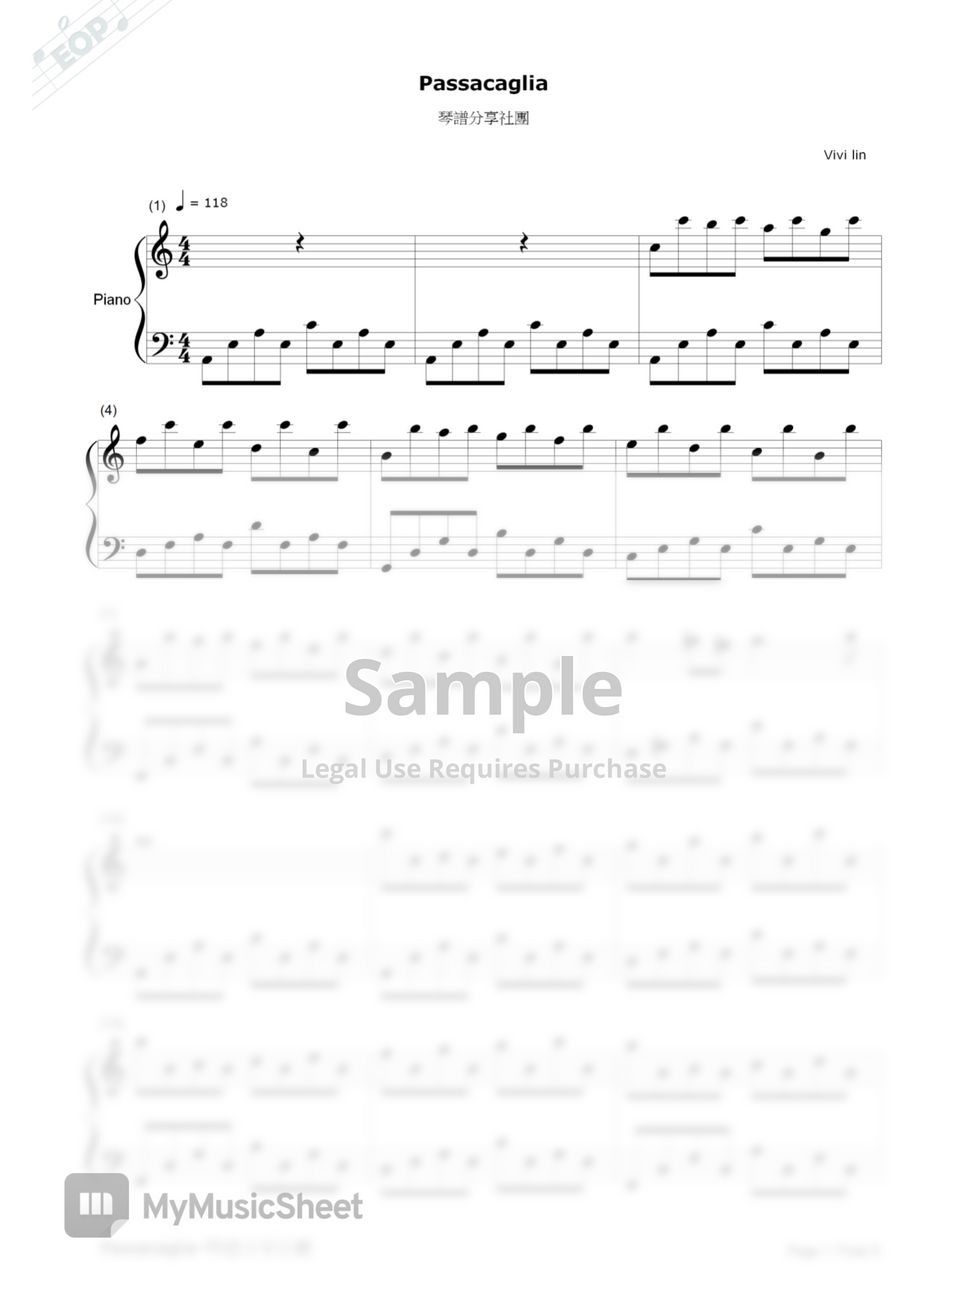 G. F. Handel - Passacaglia帕薩卡利亞舞曲，C大調，五線譜+簡譜 by Vivi Lin